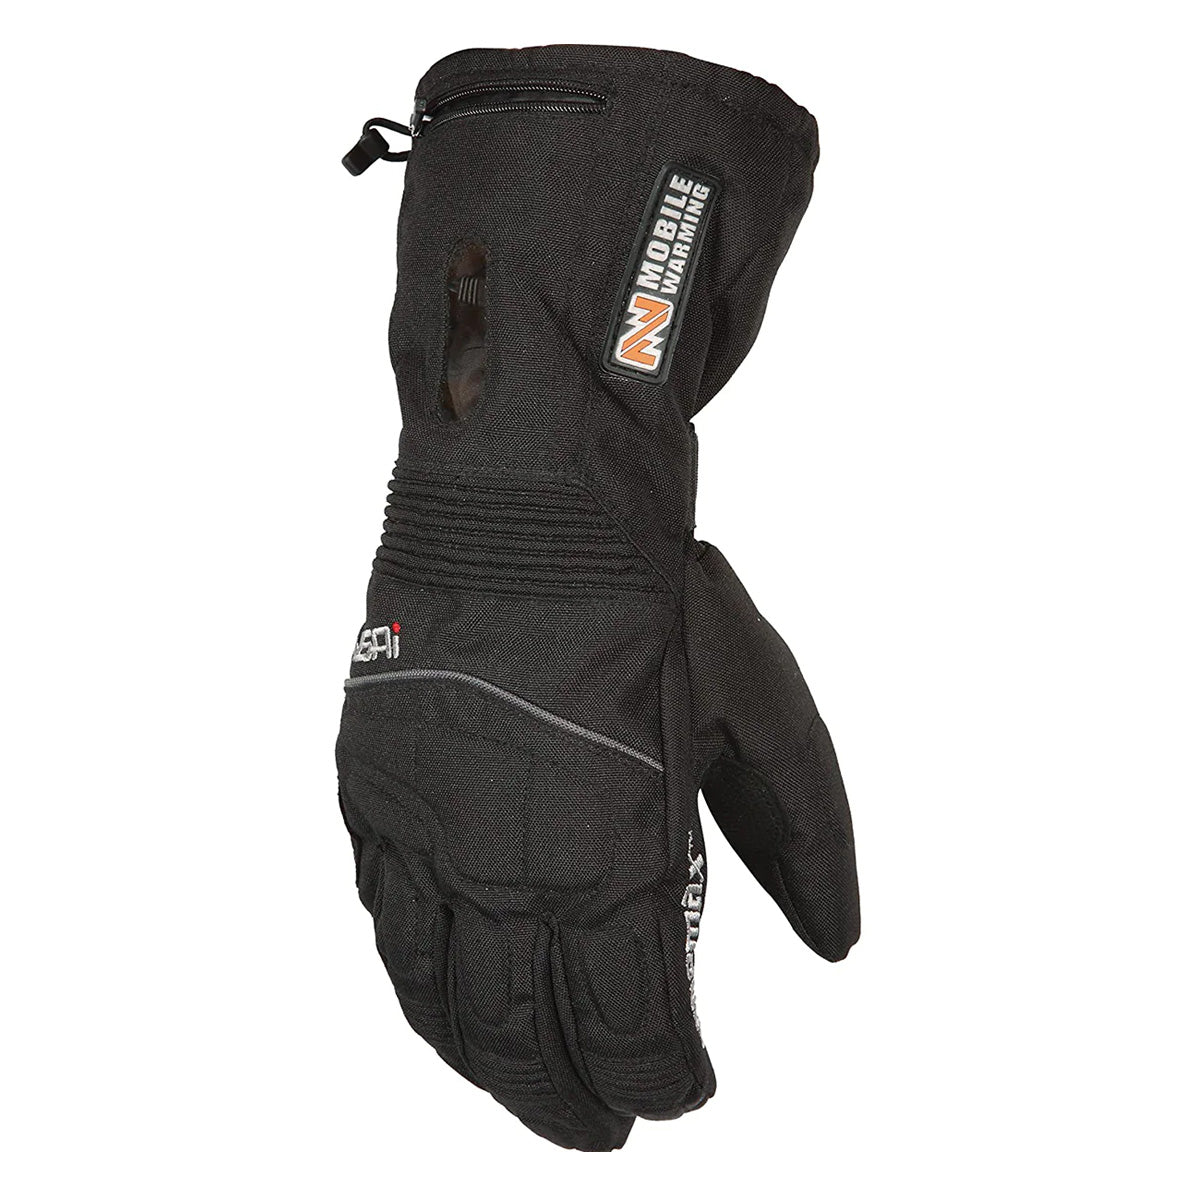 
Mobile Warming TX Heated Men's Street Gloves 